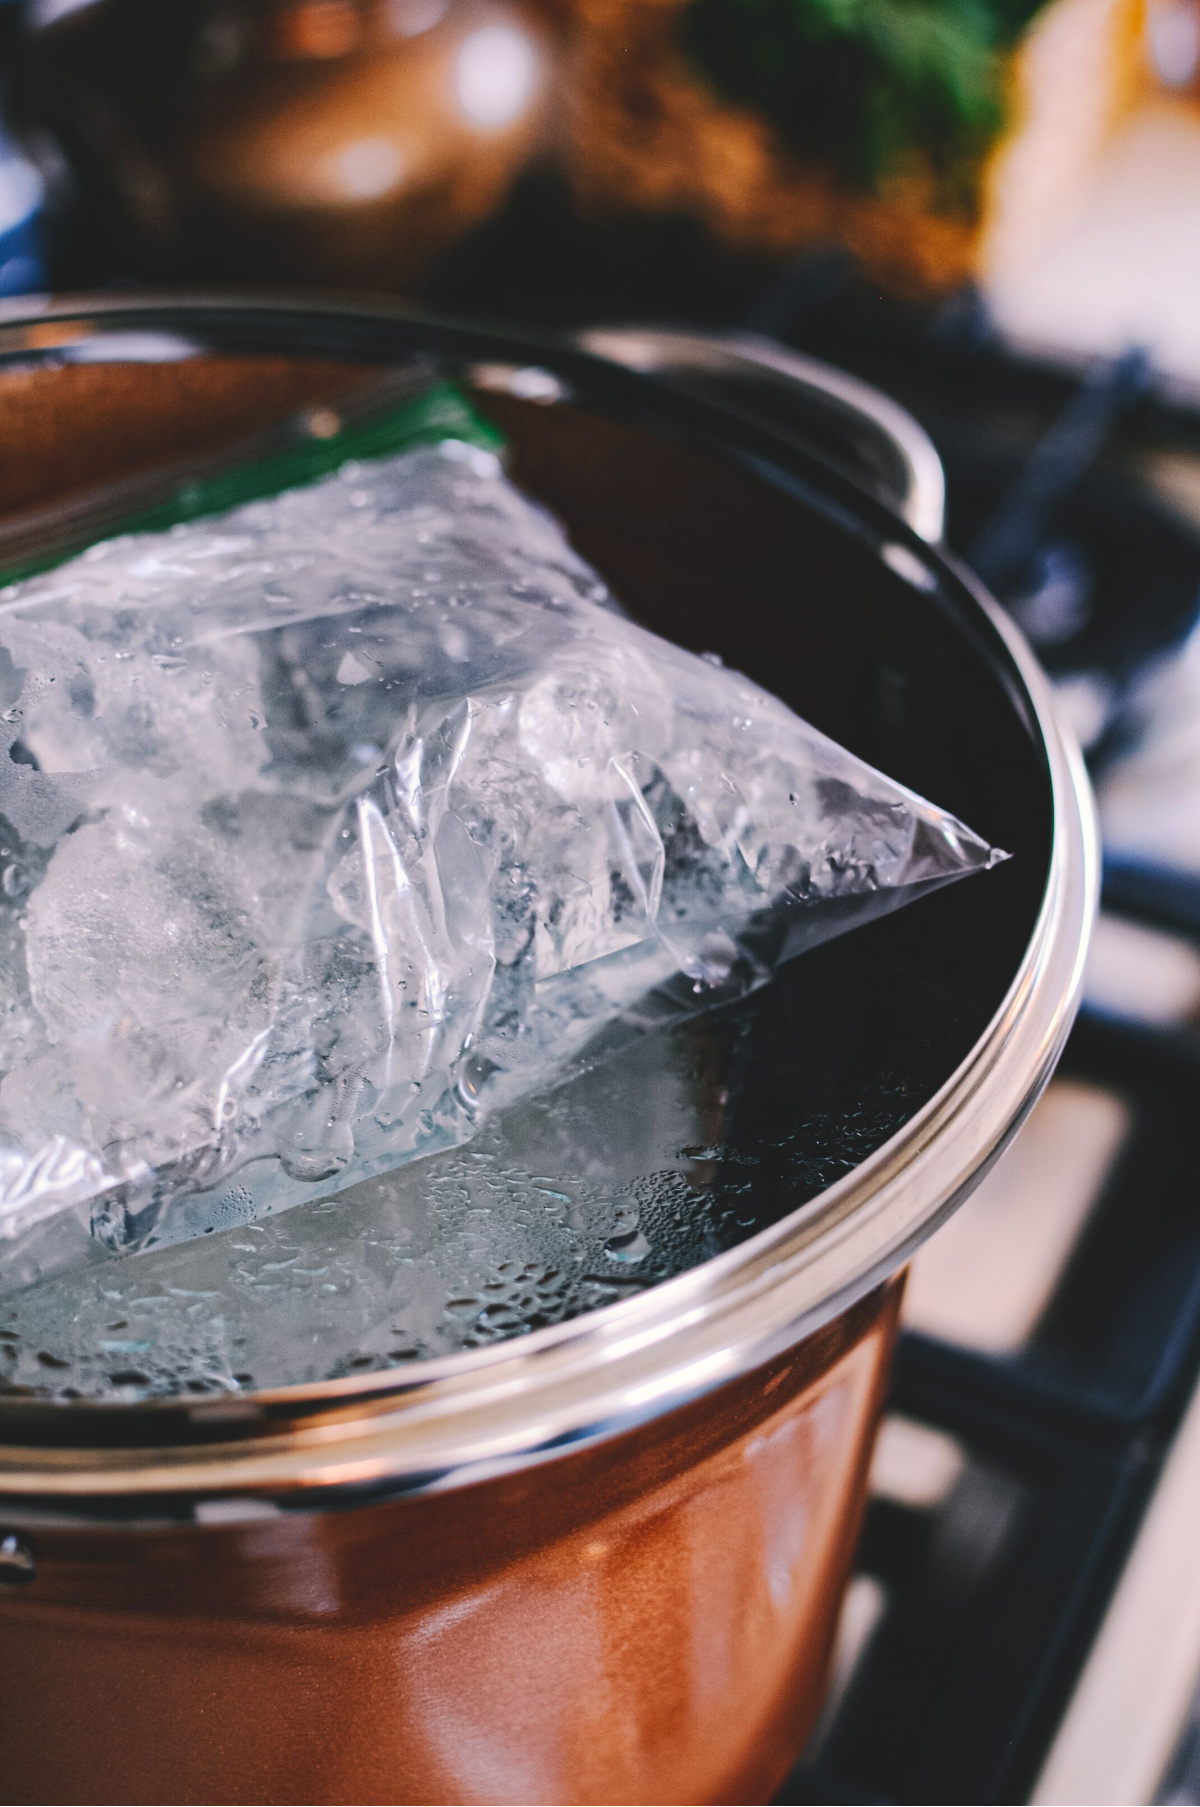 bag of ice melting on a pot lid